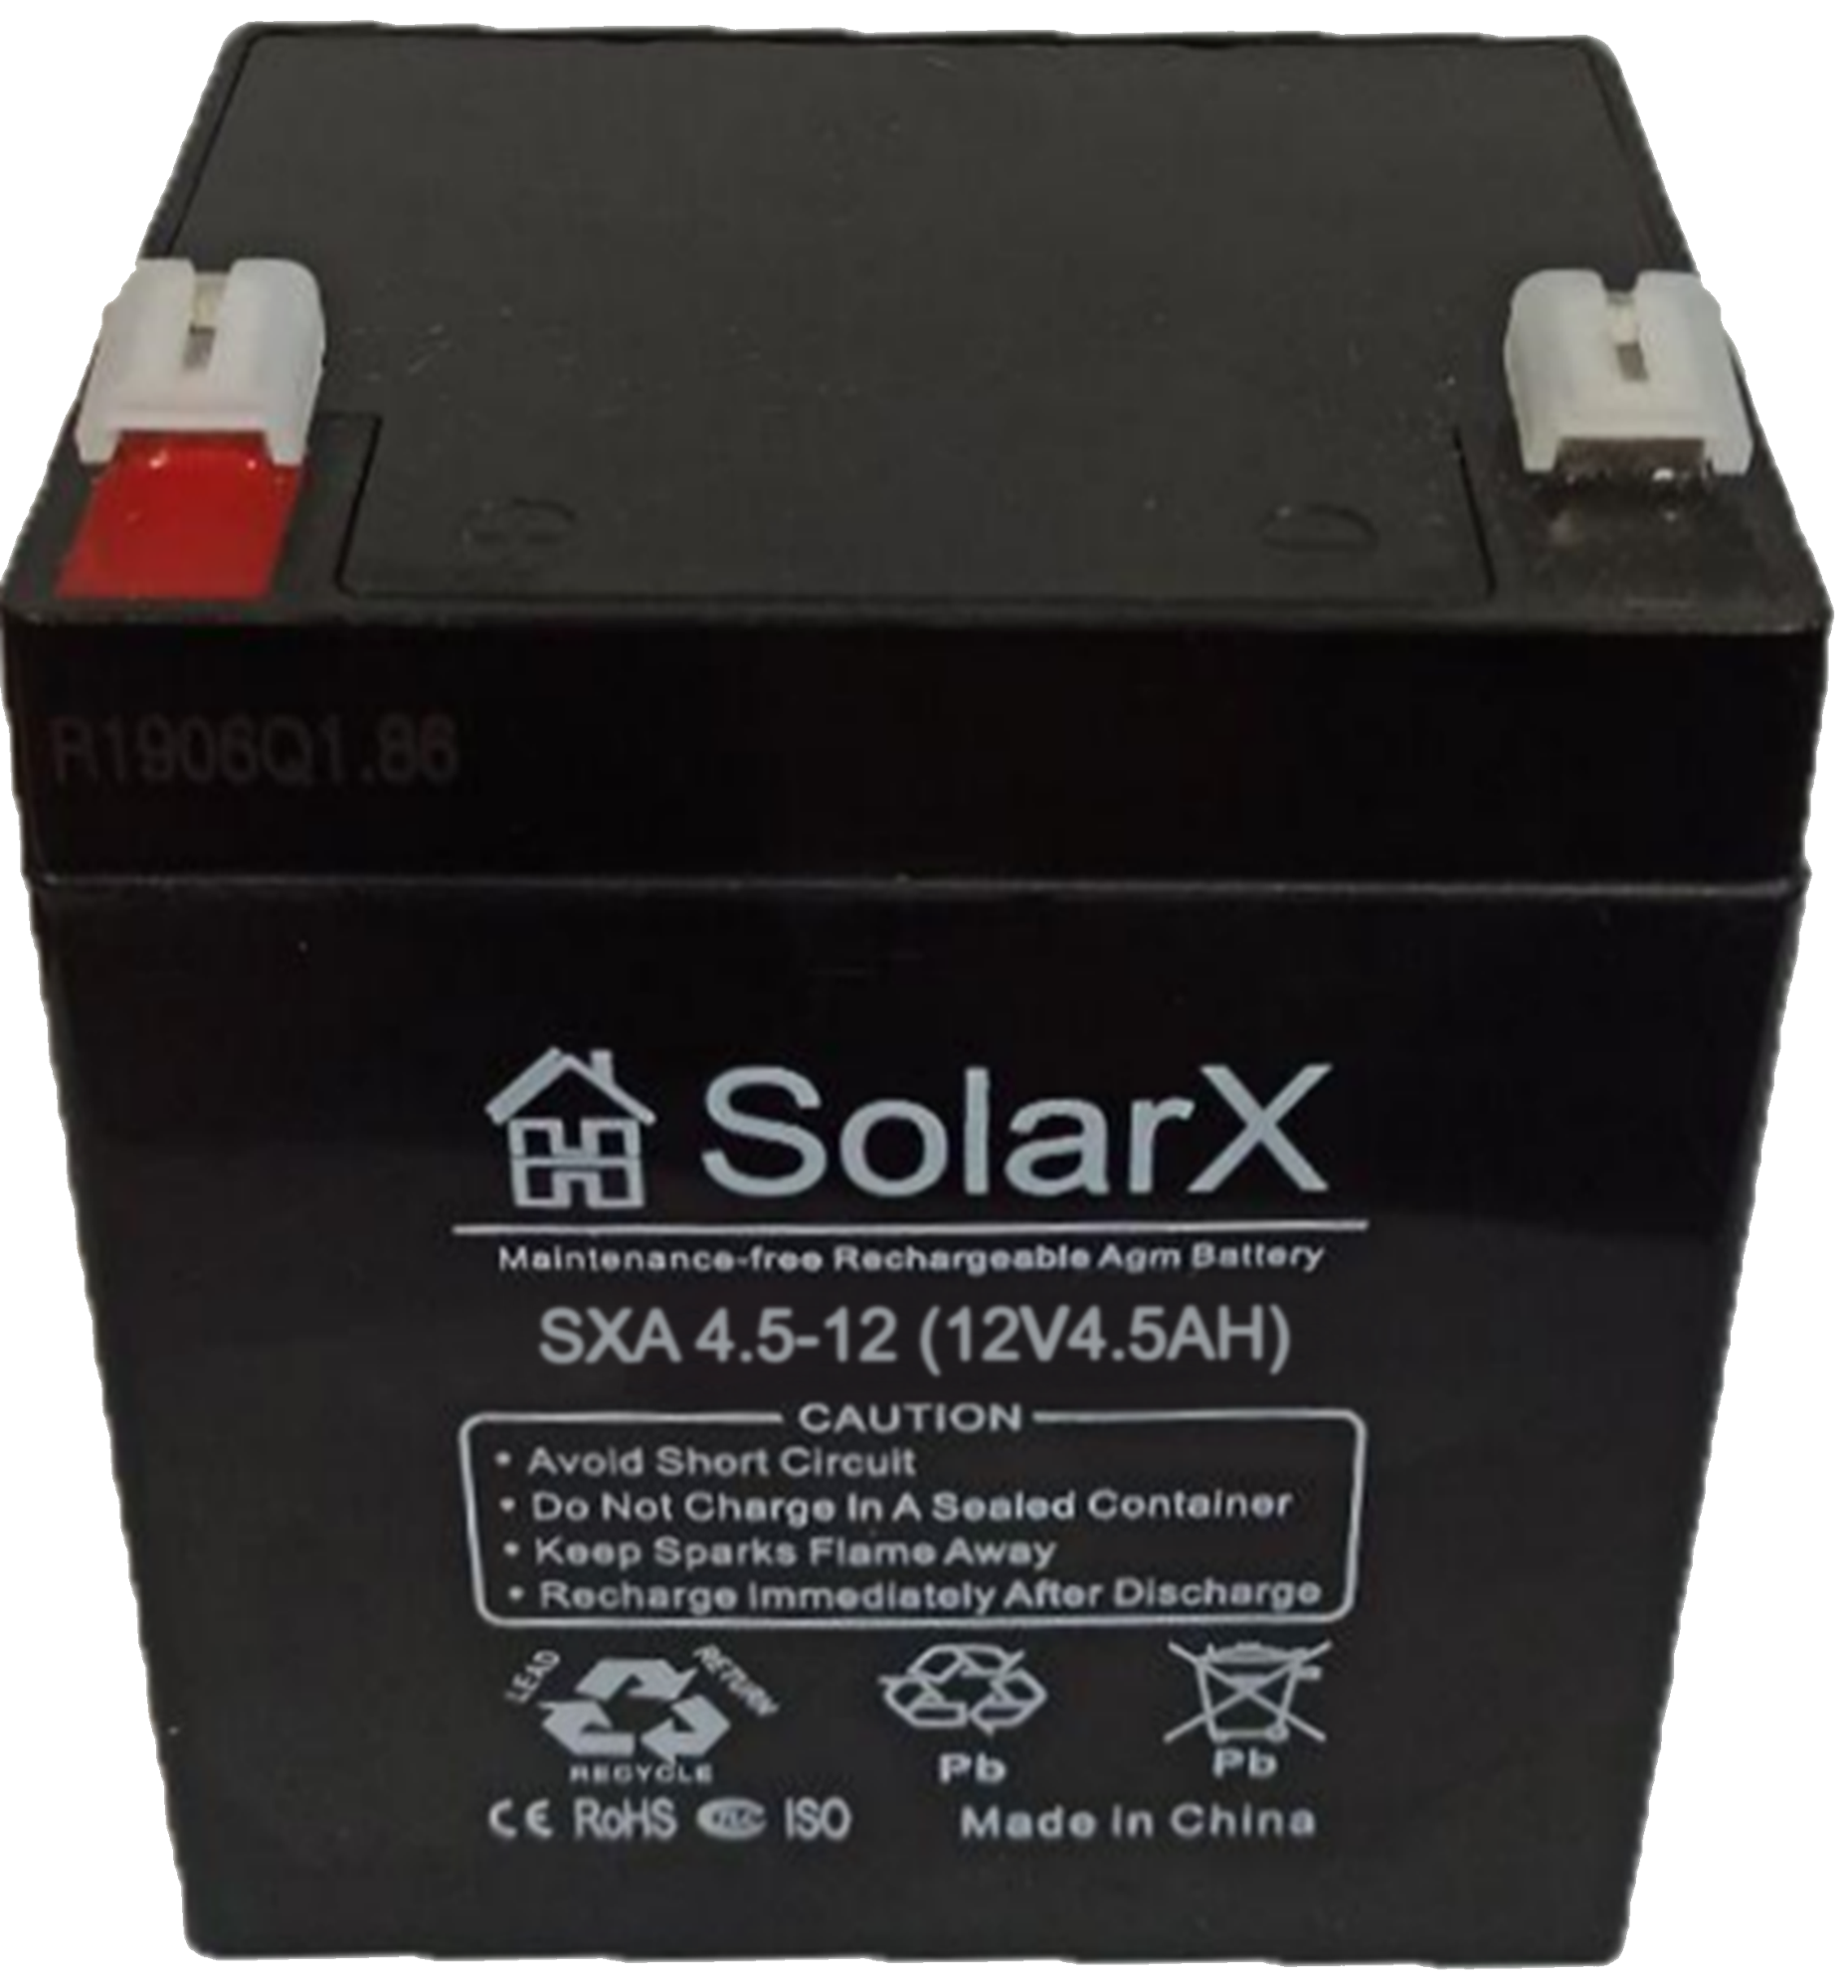 Solarx sxa 4.5 12